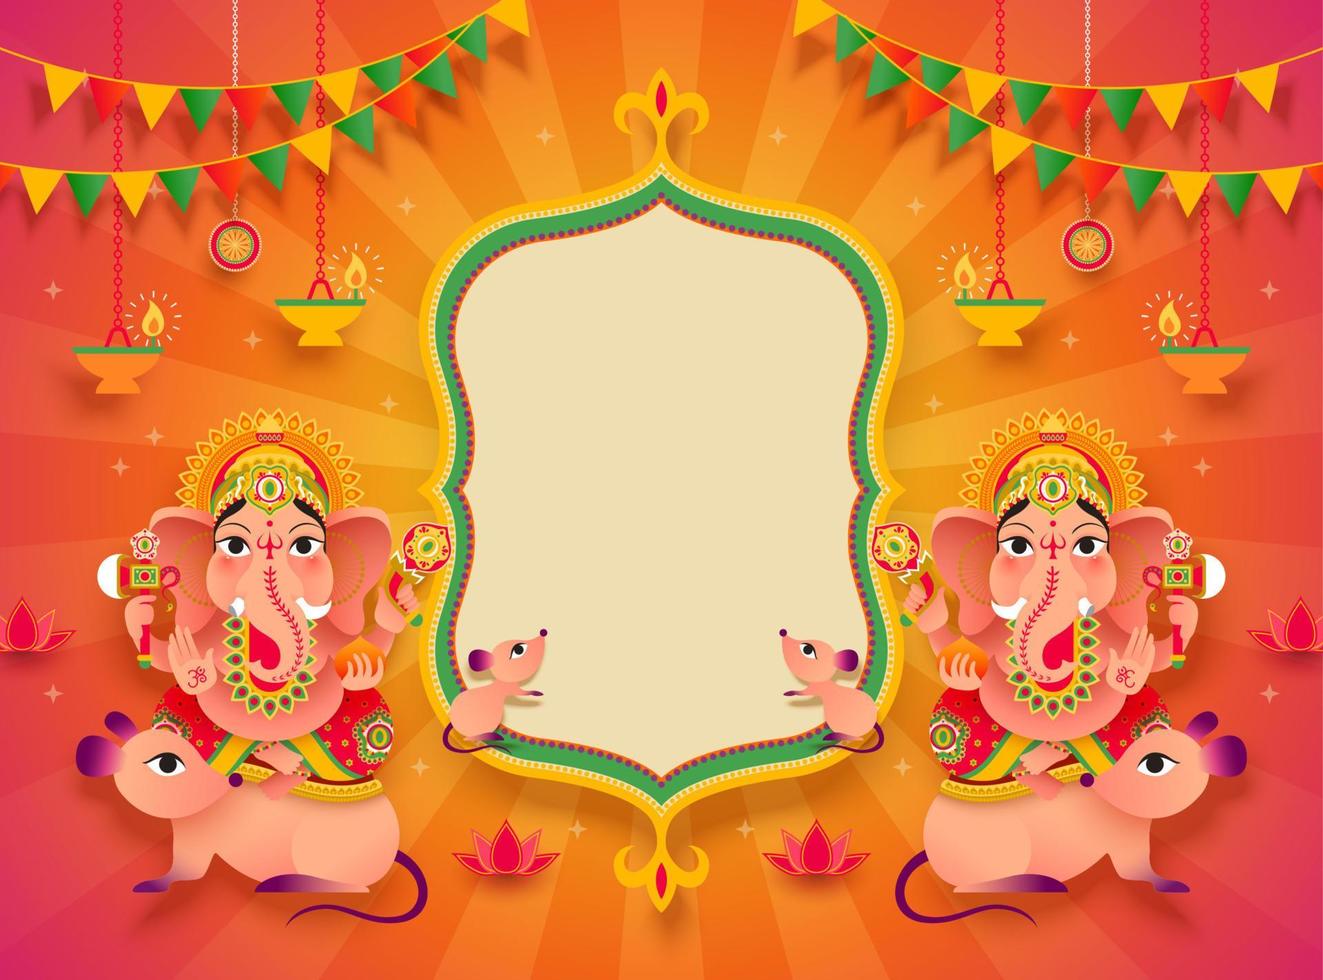 prachtig ganesh chaturthi festival achtergrond ontwerp met Hindoe god ganesha en blanco kopiëren ruimte vector